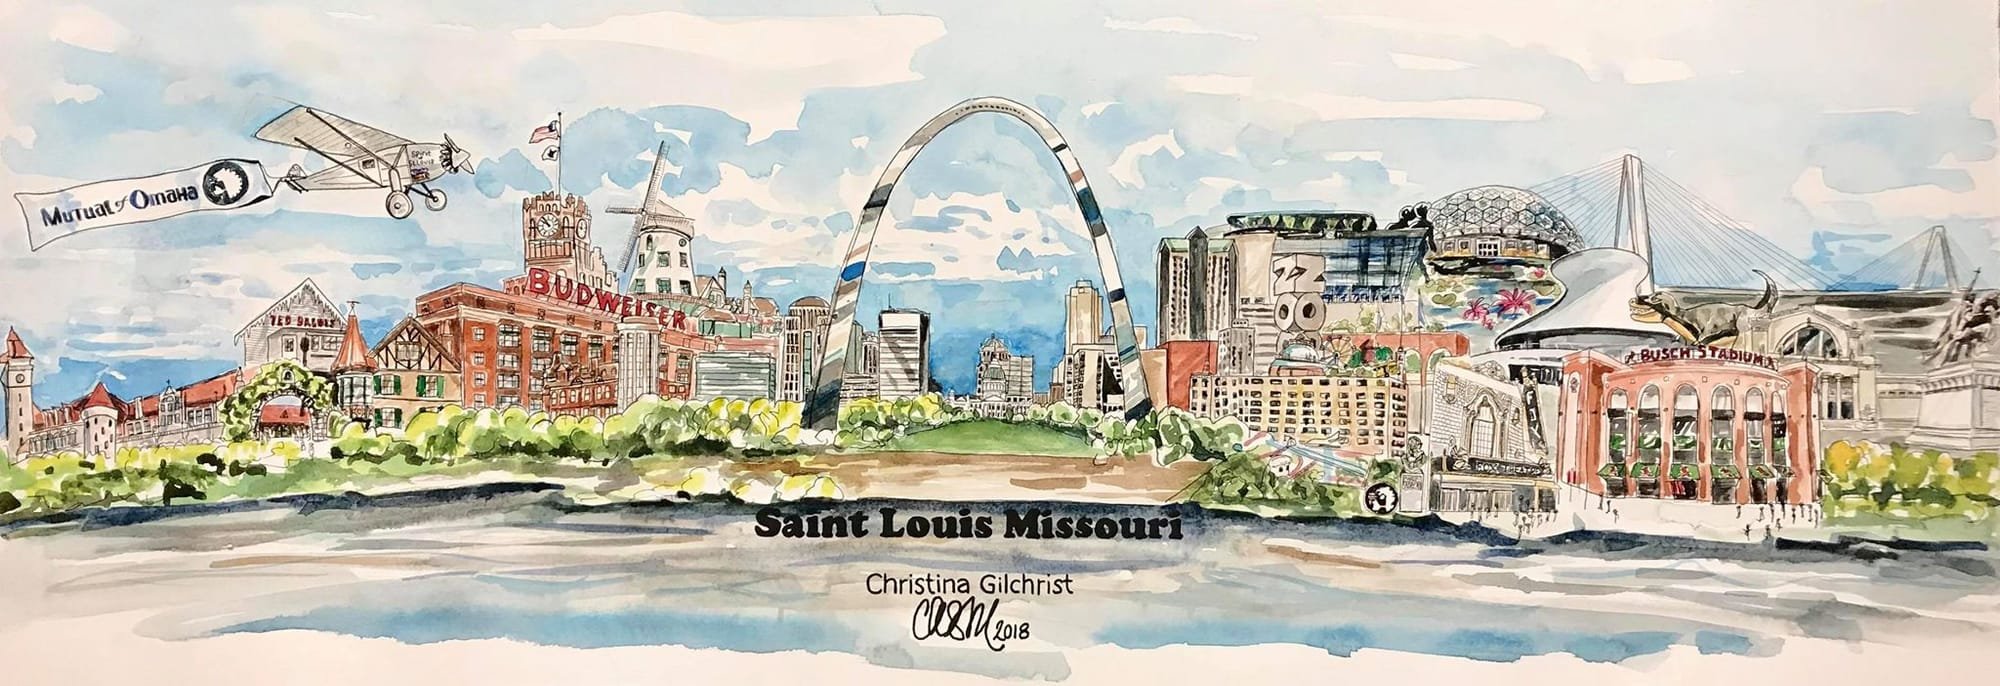 St. Louis Skyline